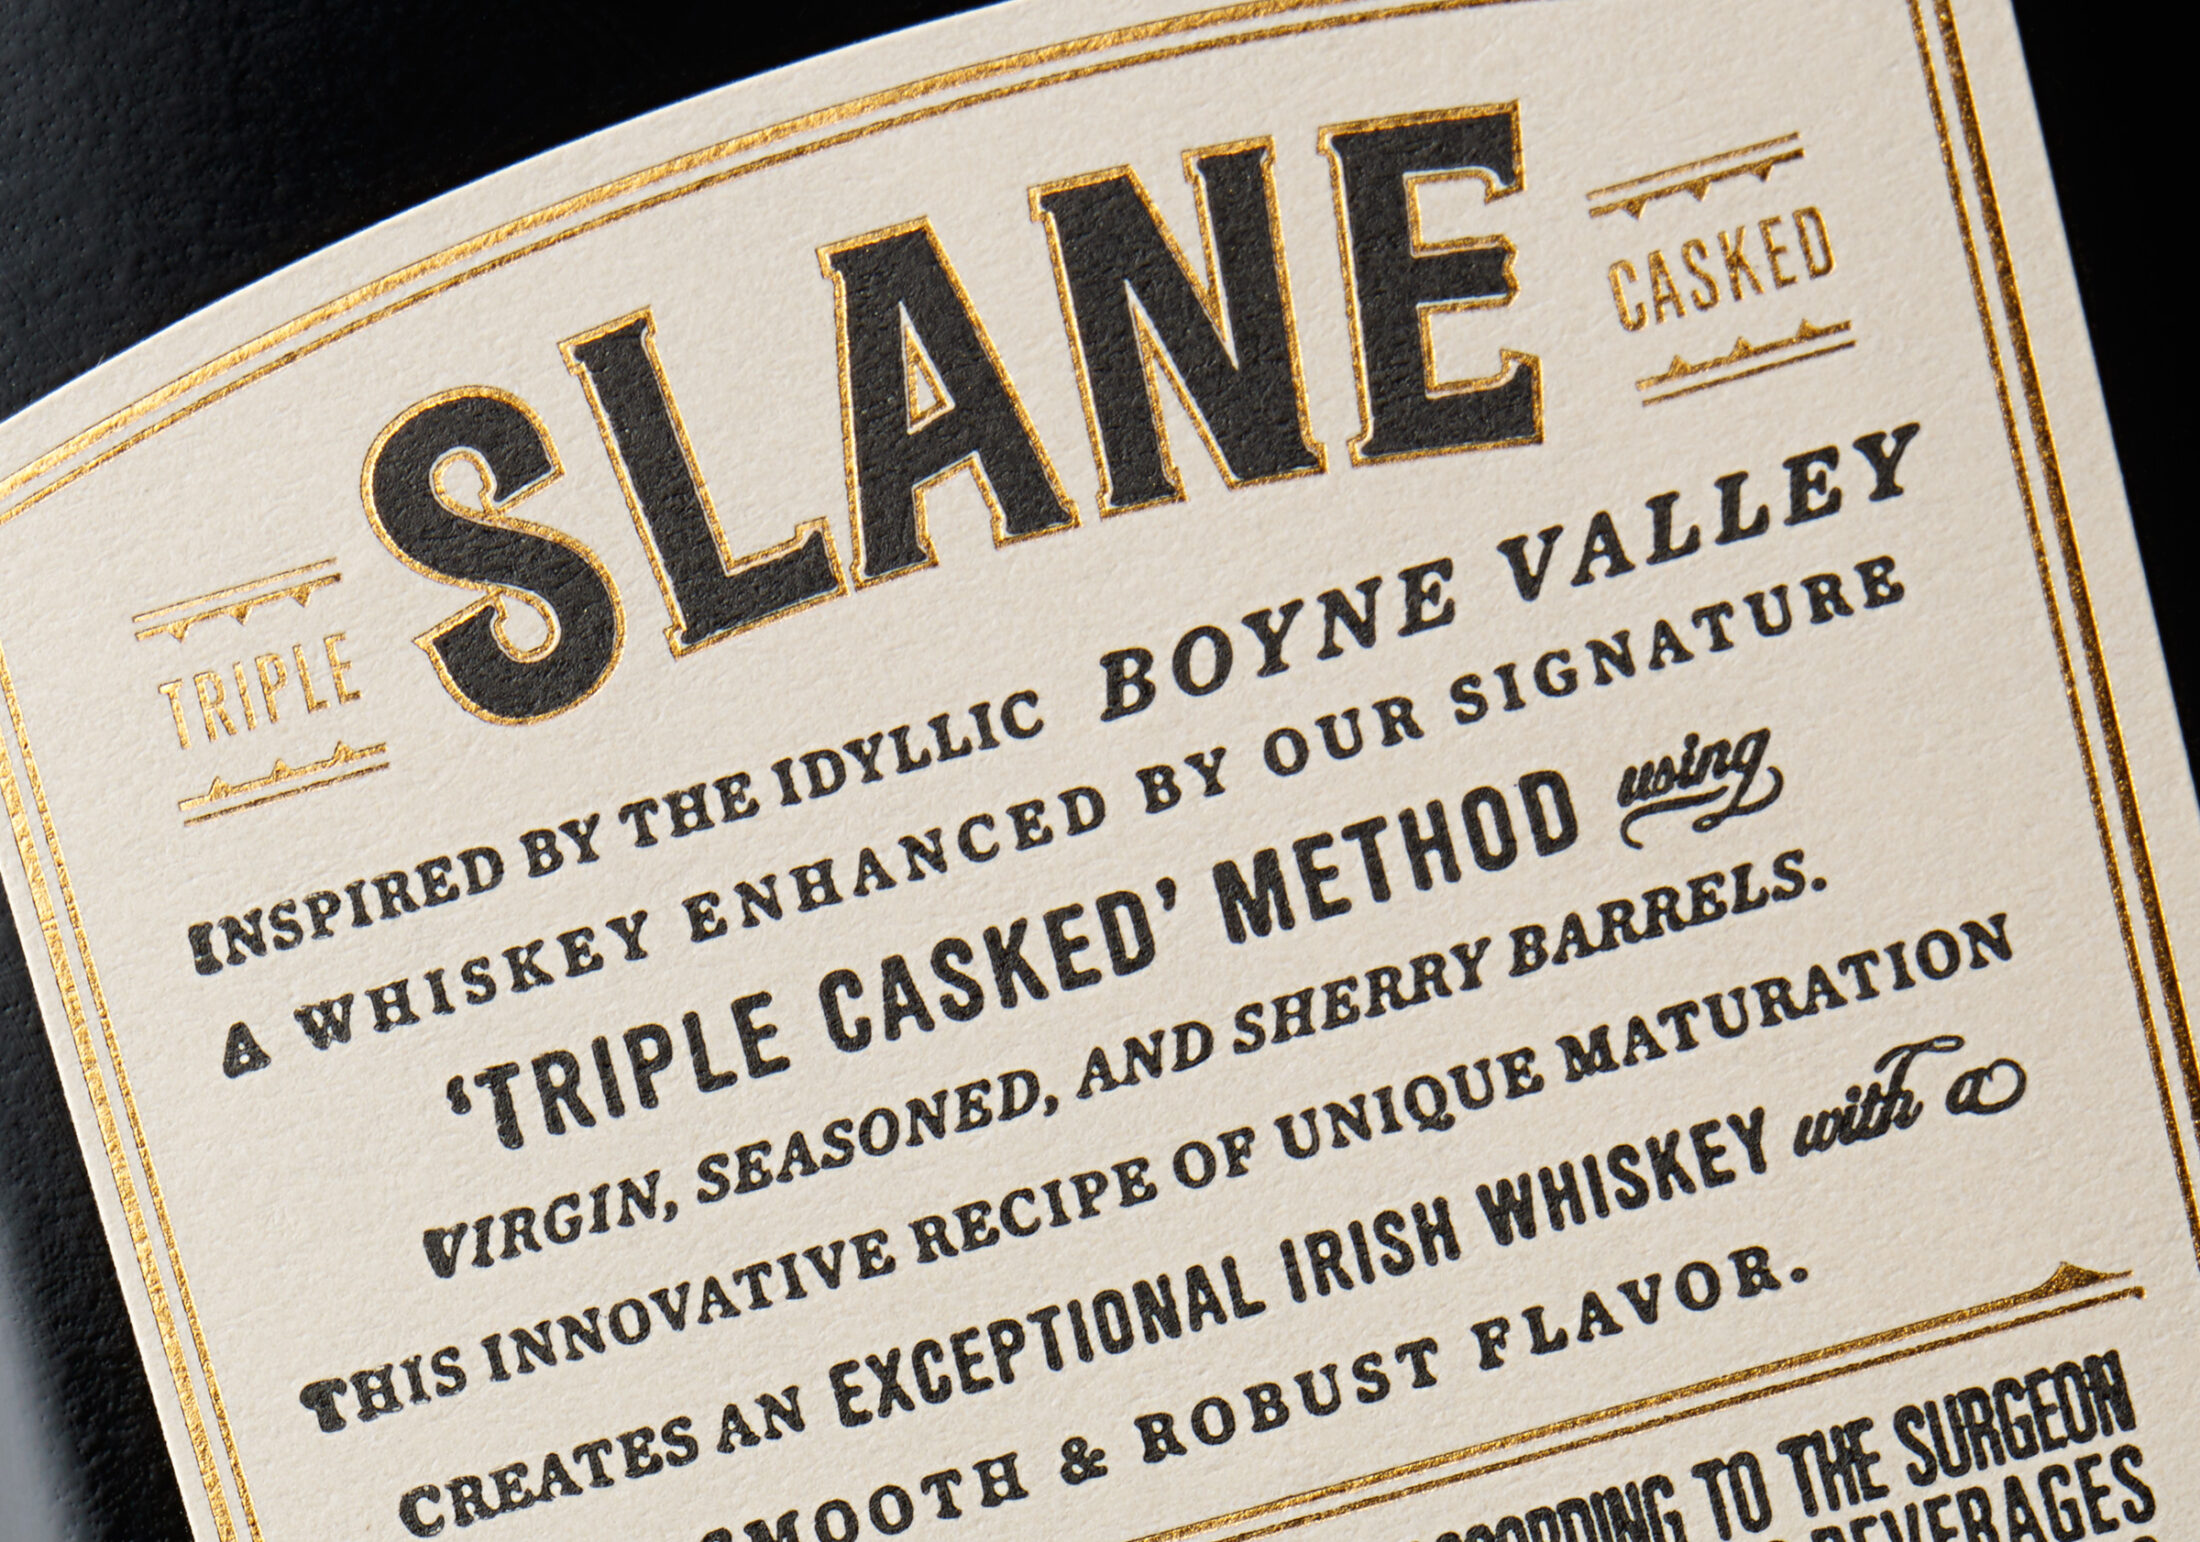 Slane Irish Whiskey - Chad Michael Studio